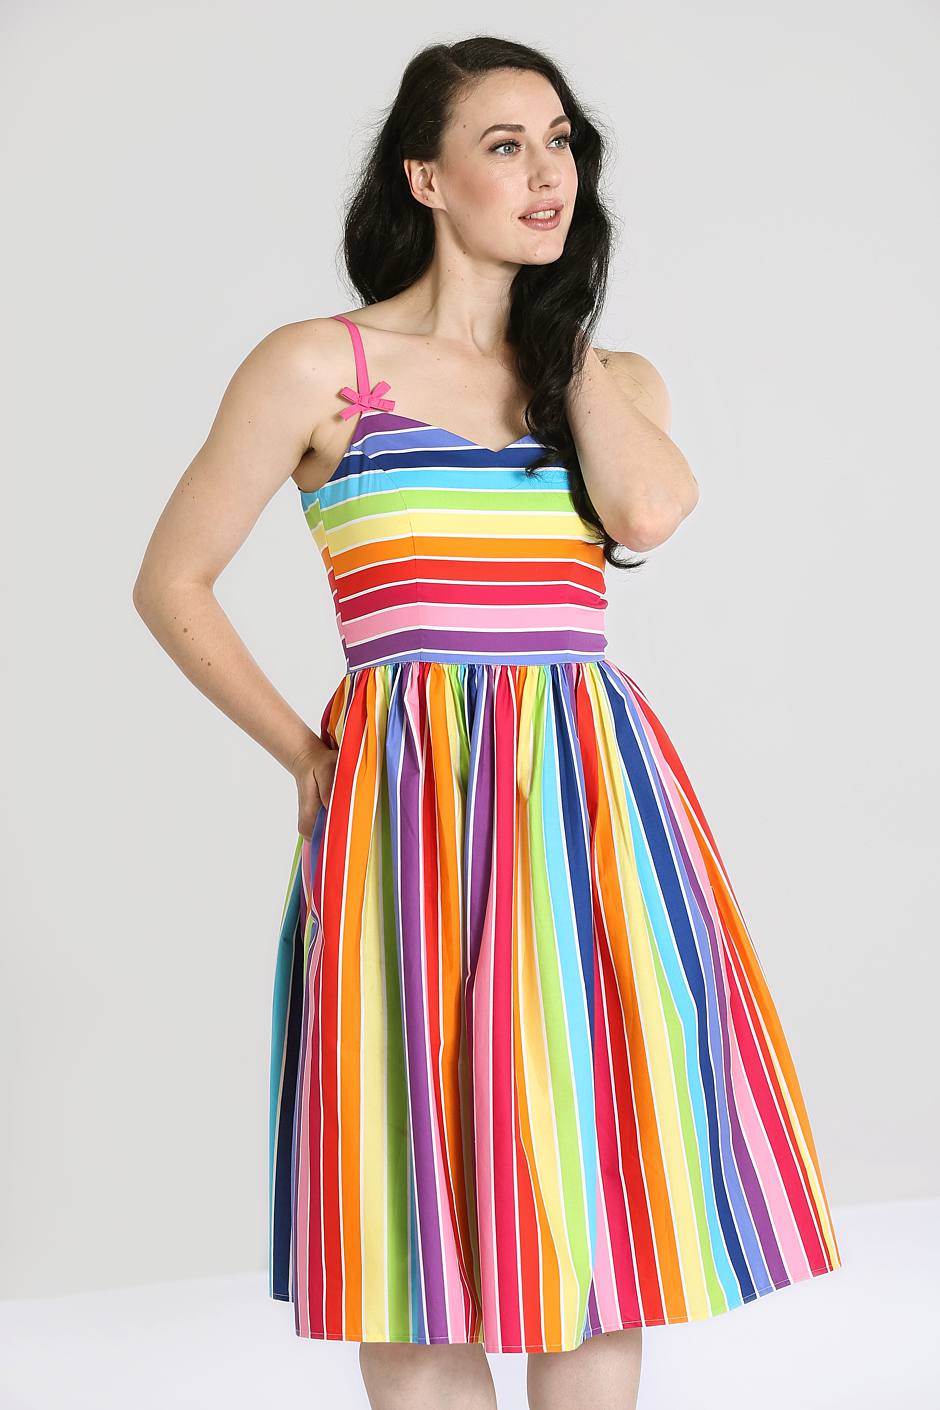 New Over The Rainbow Dress